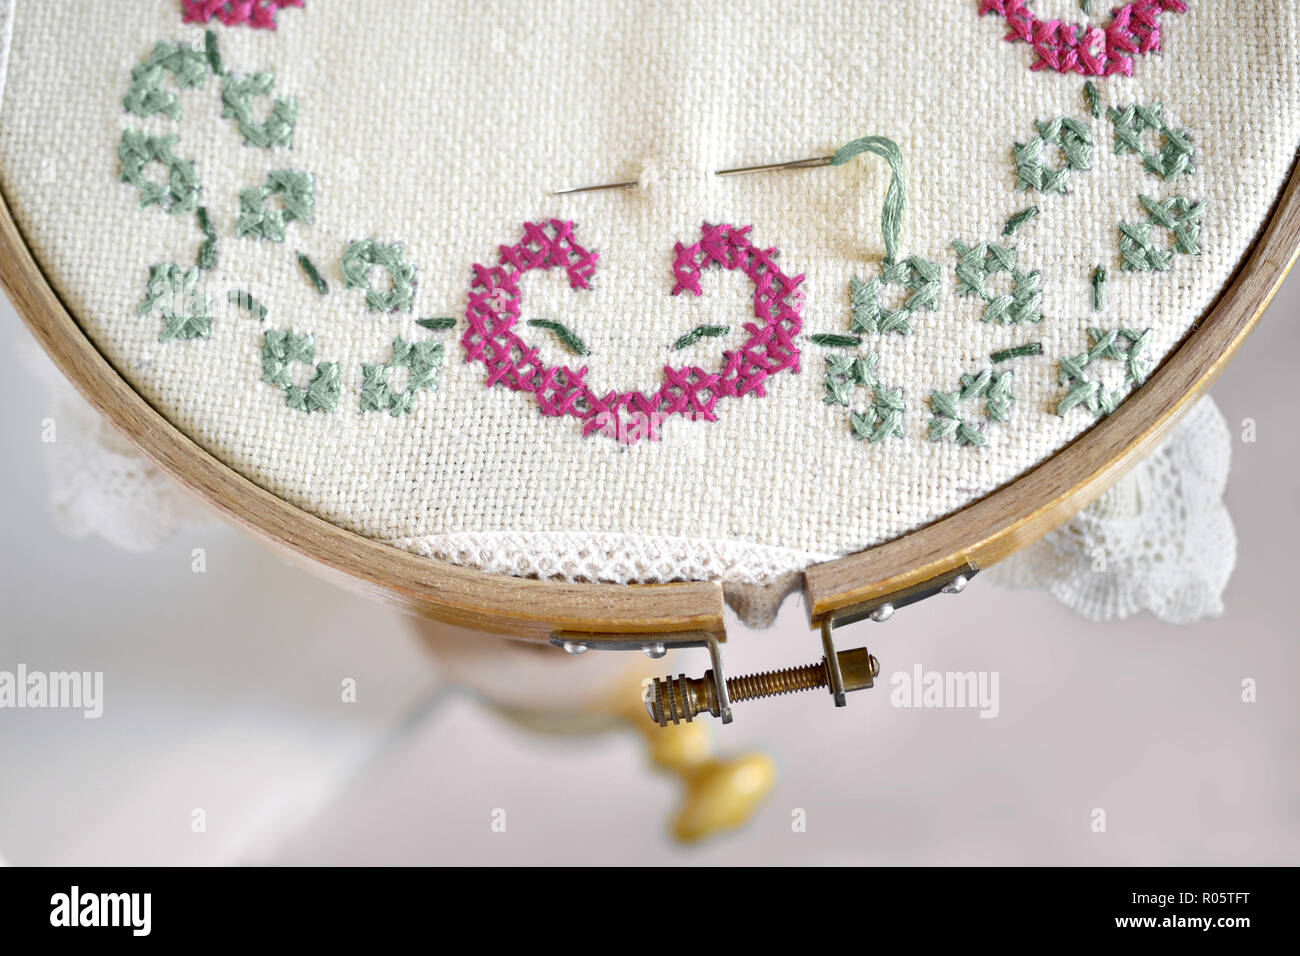 embroidery yarn handwork sewing wood thread embroidery hoop needle Stock Photo